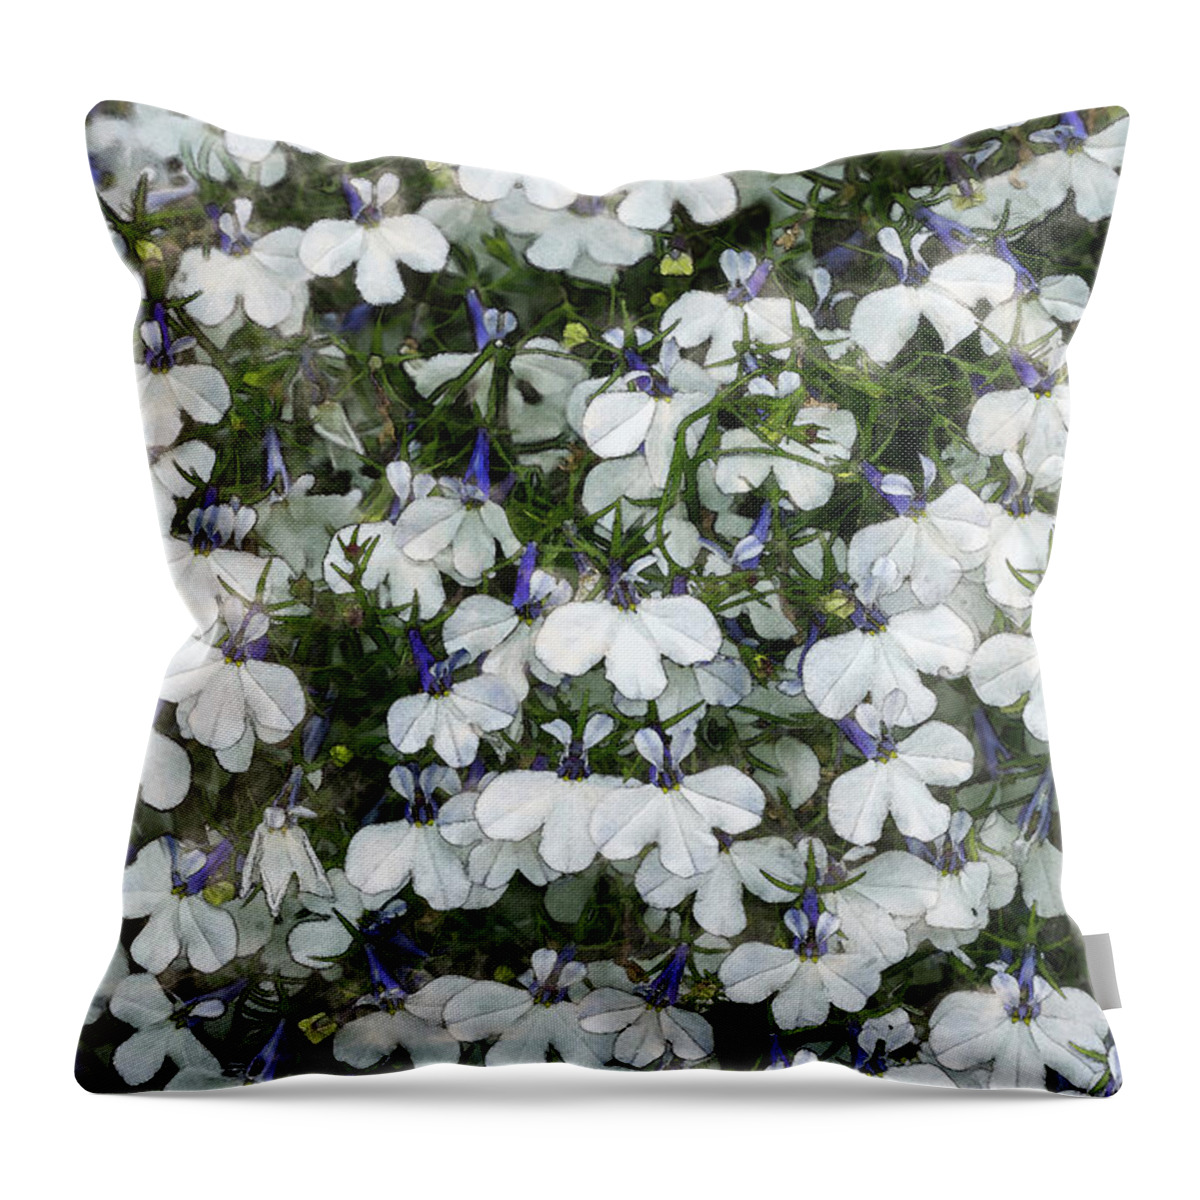 Flowers Throw Pillow featuring the digital art Lobelia Erinus by Tanya C Smith